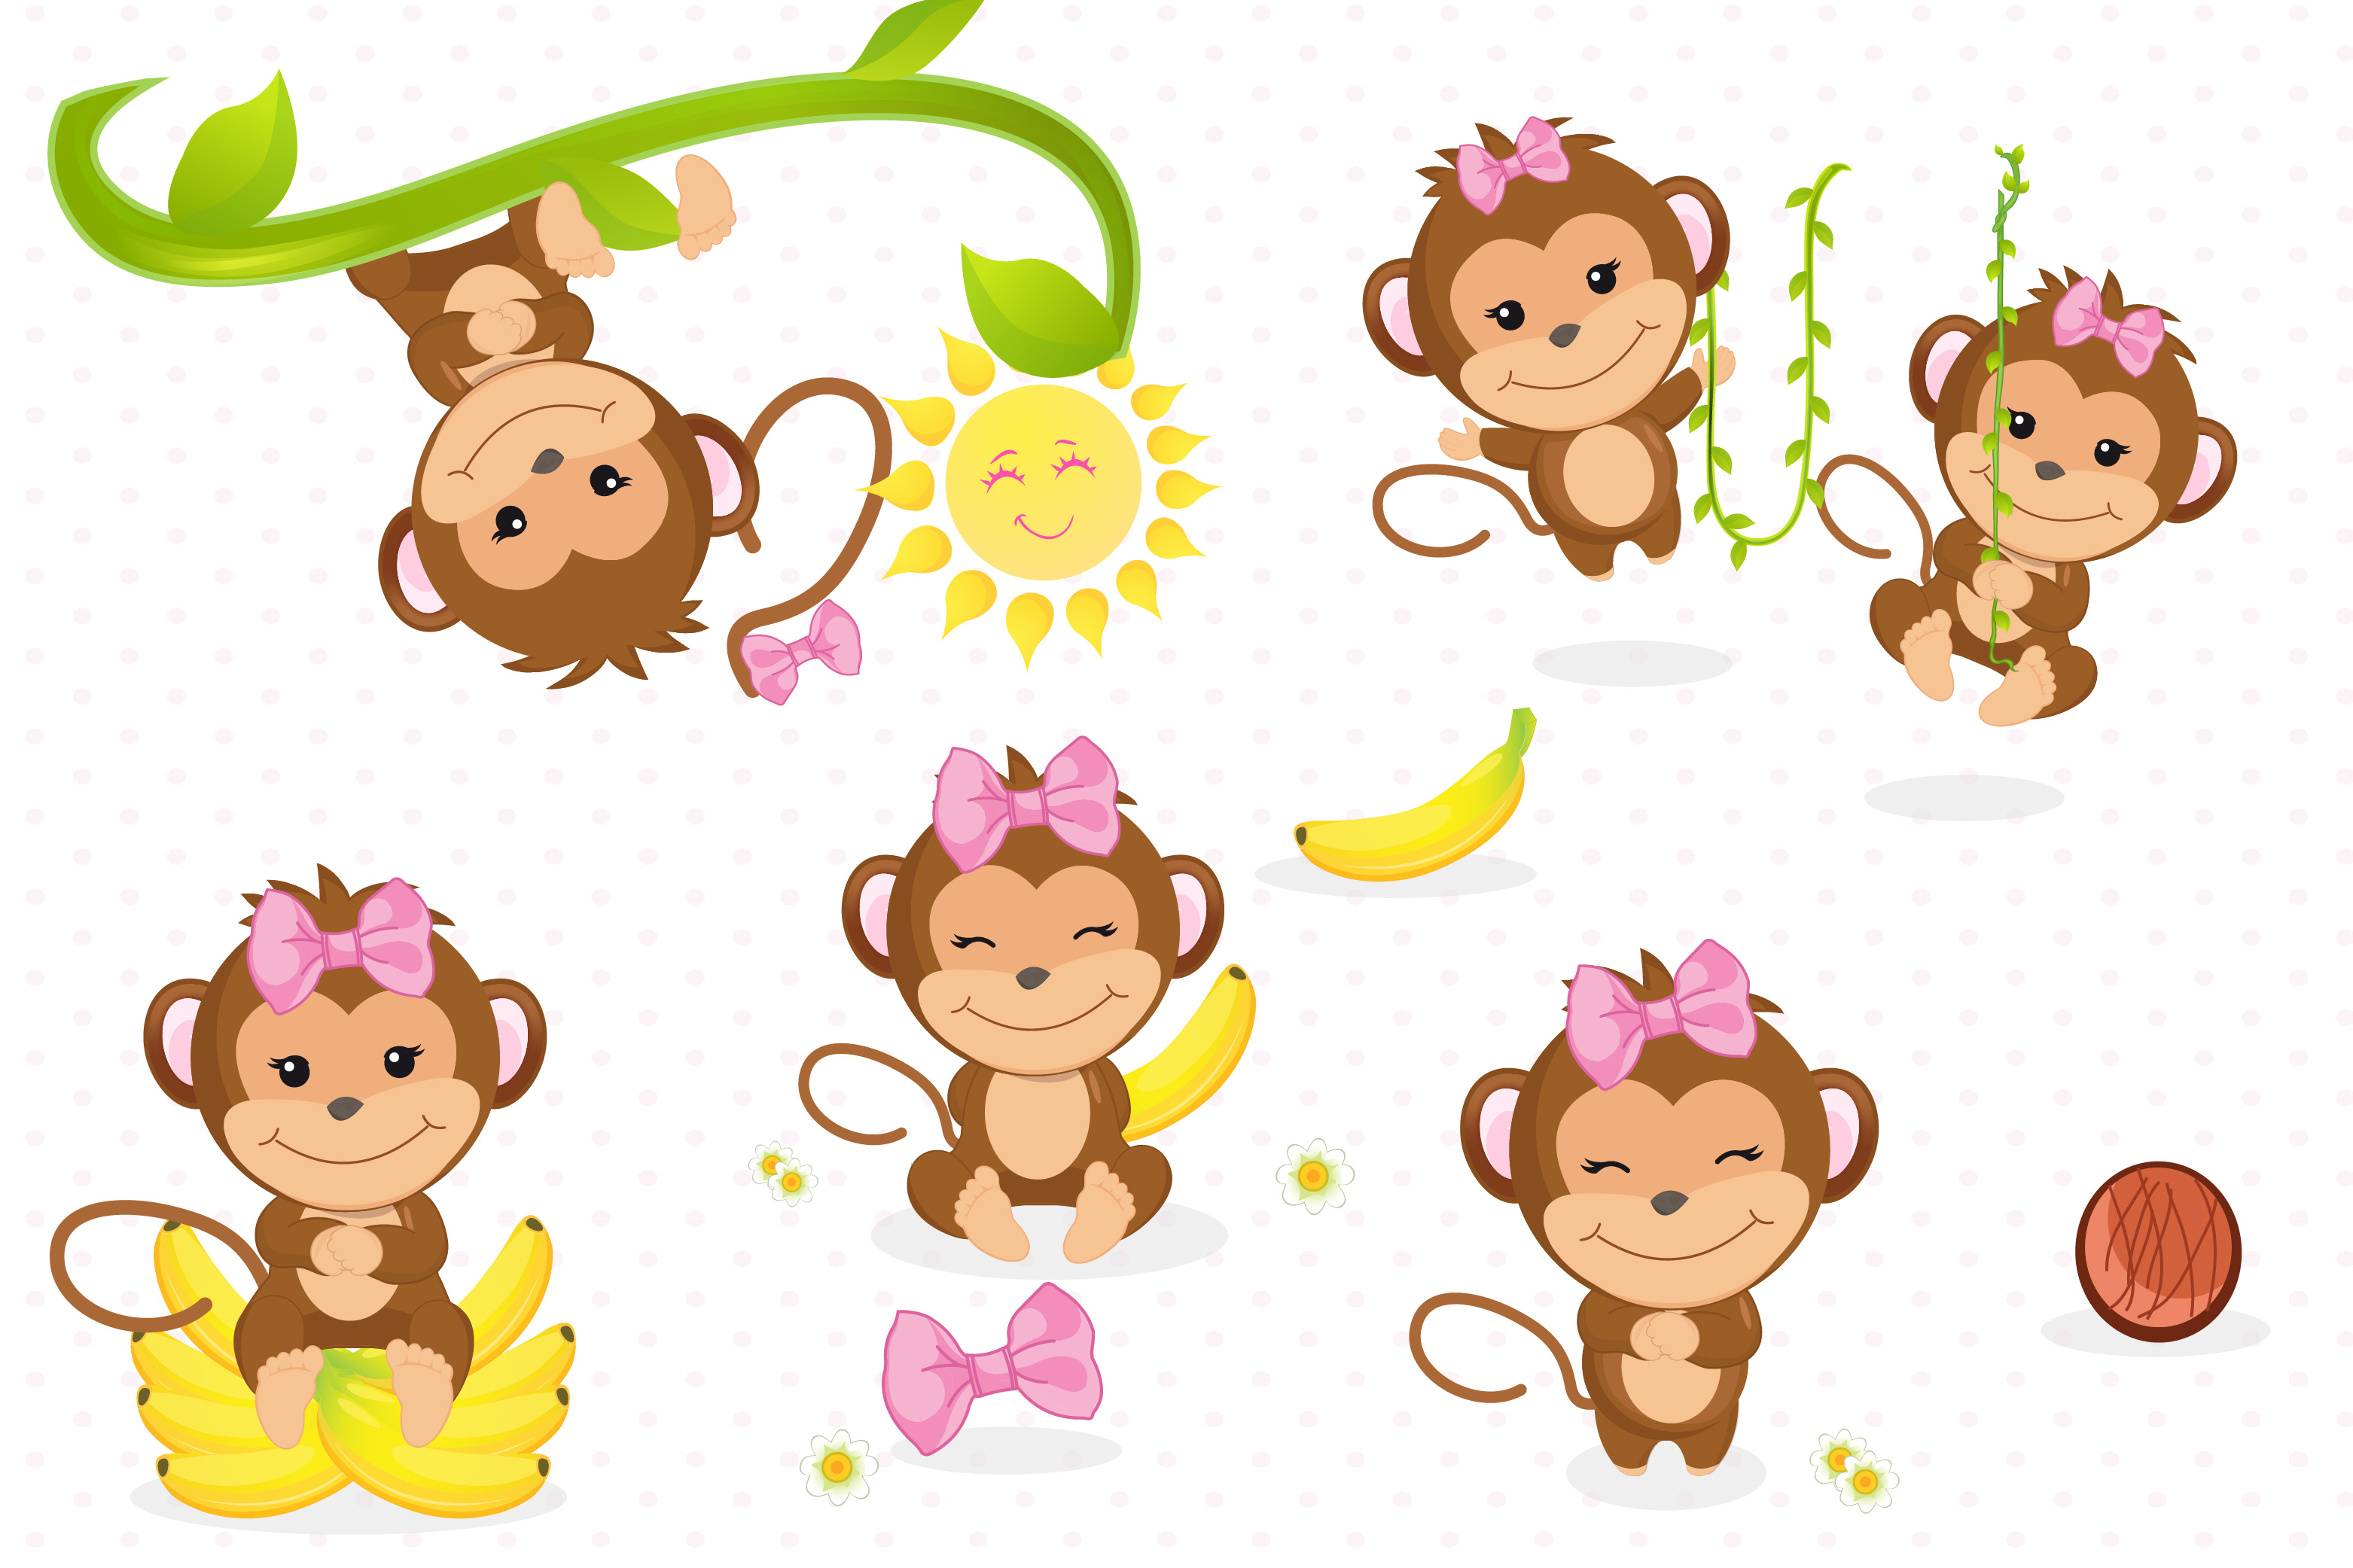 Monkey clipart, Monkey girl illustrations